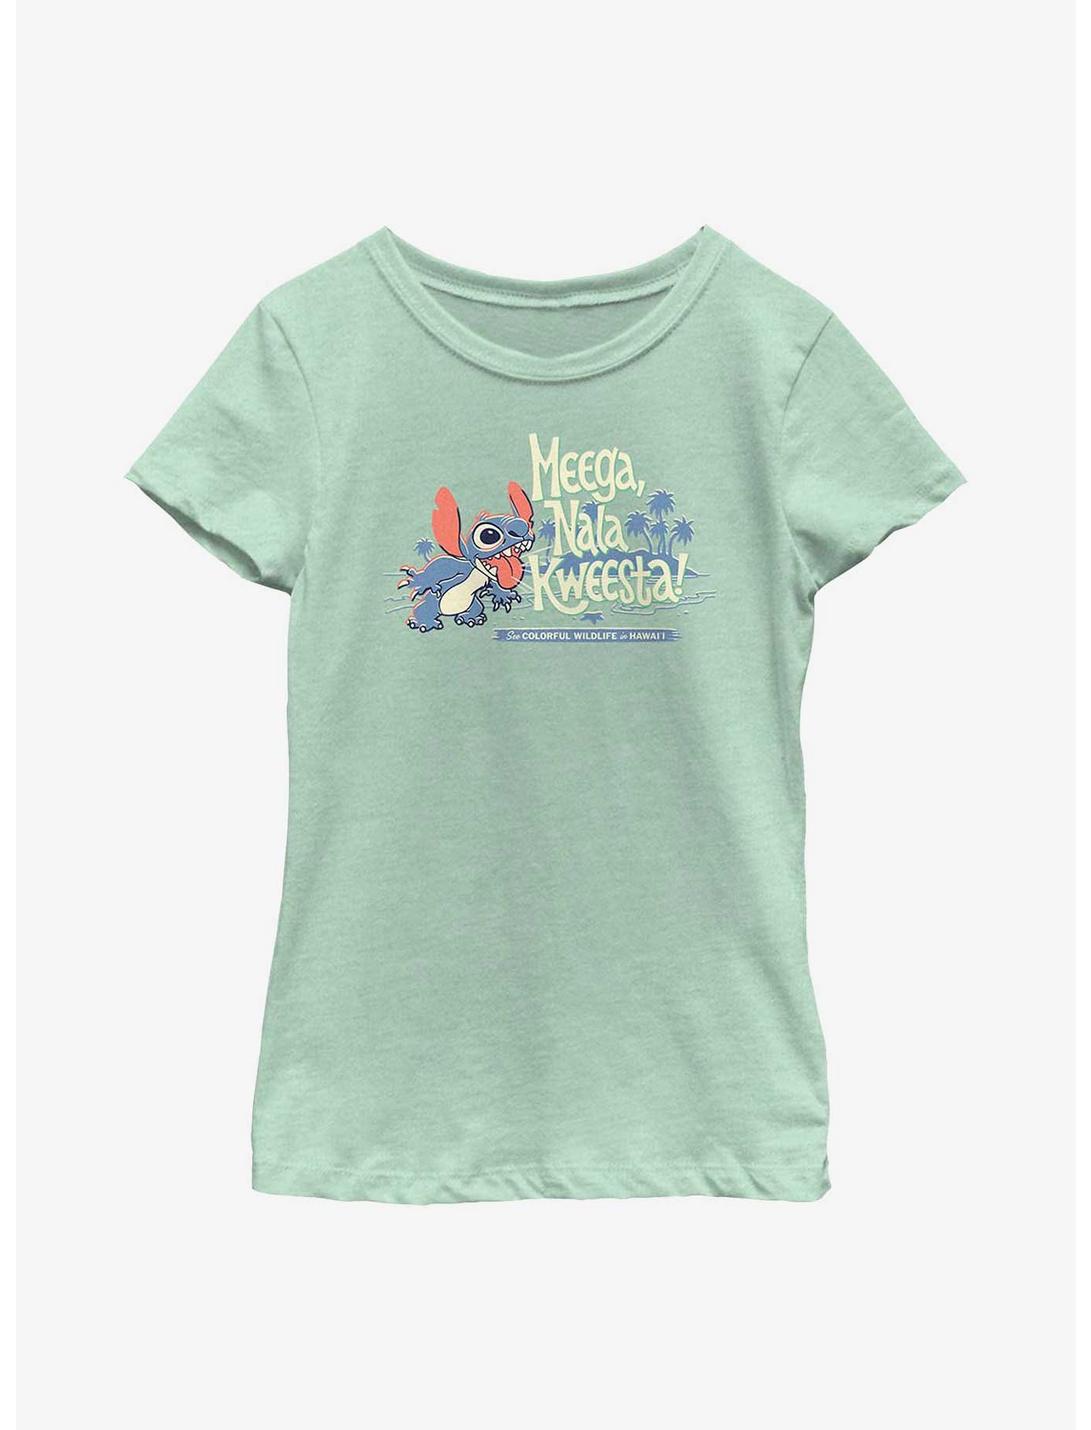 Disney Lilo & Stitch Meega, Nala Kweesta! Youth Girls T-Shirt, MINT, hi-res